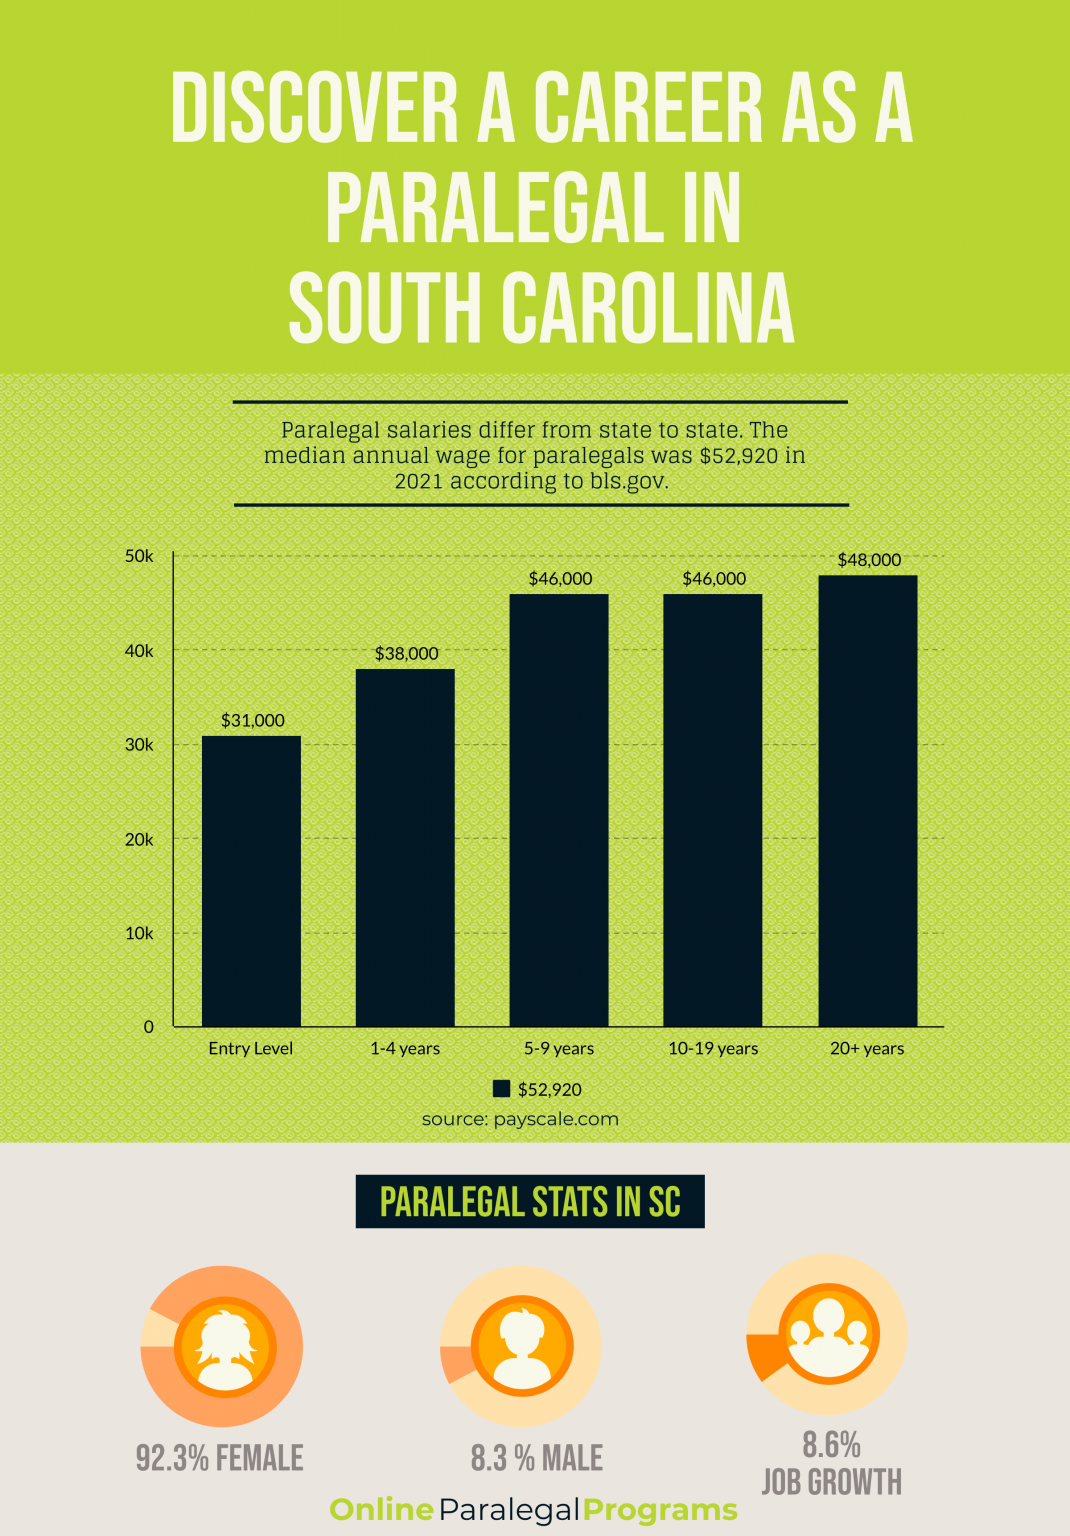 South Carolina Paralegal Education Career and Salary Guide